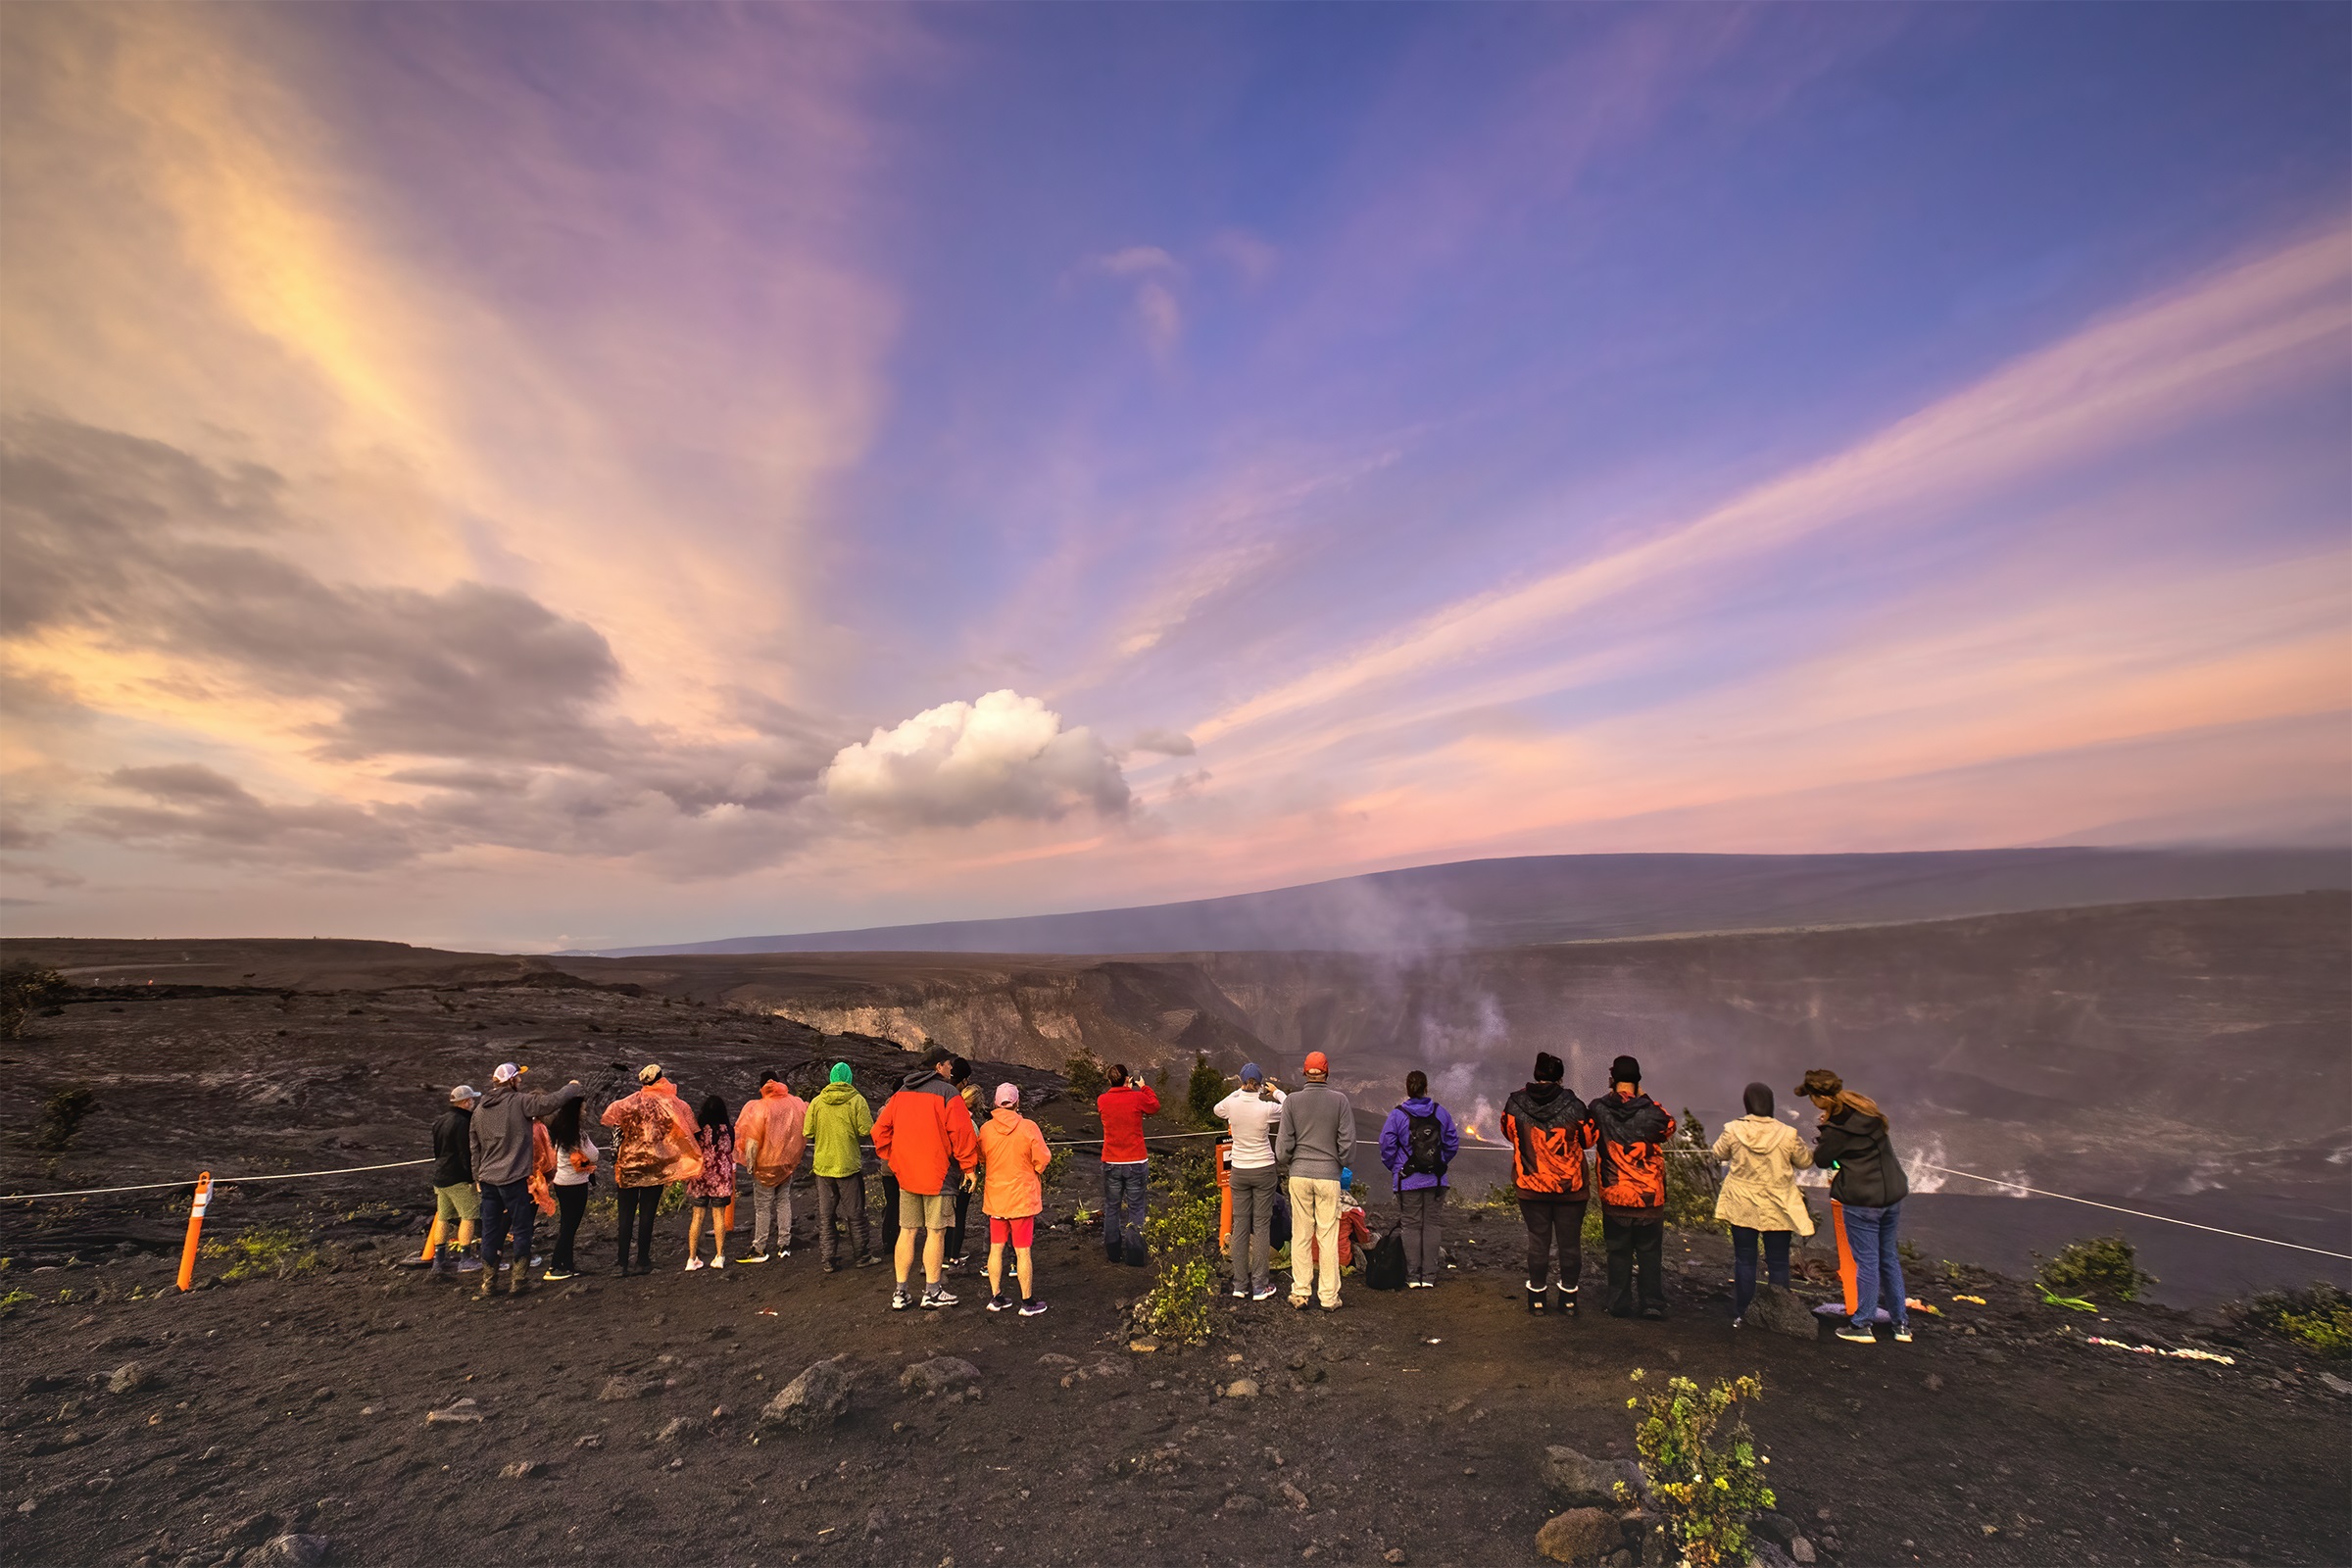 People watch morning light illuminate a volcanic landscape